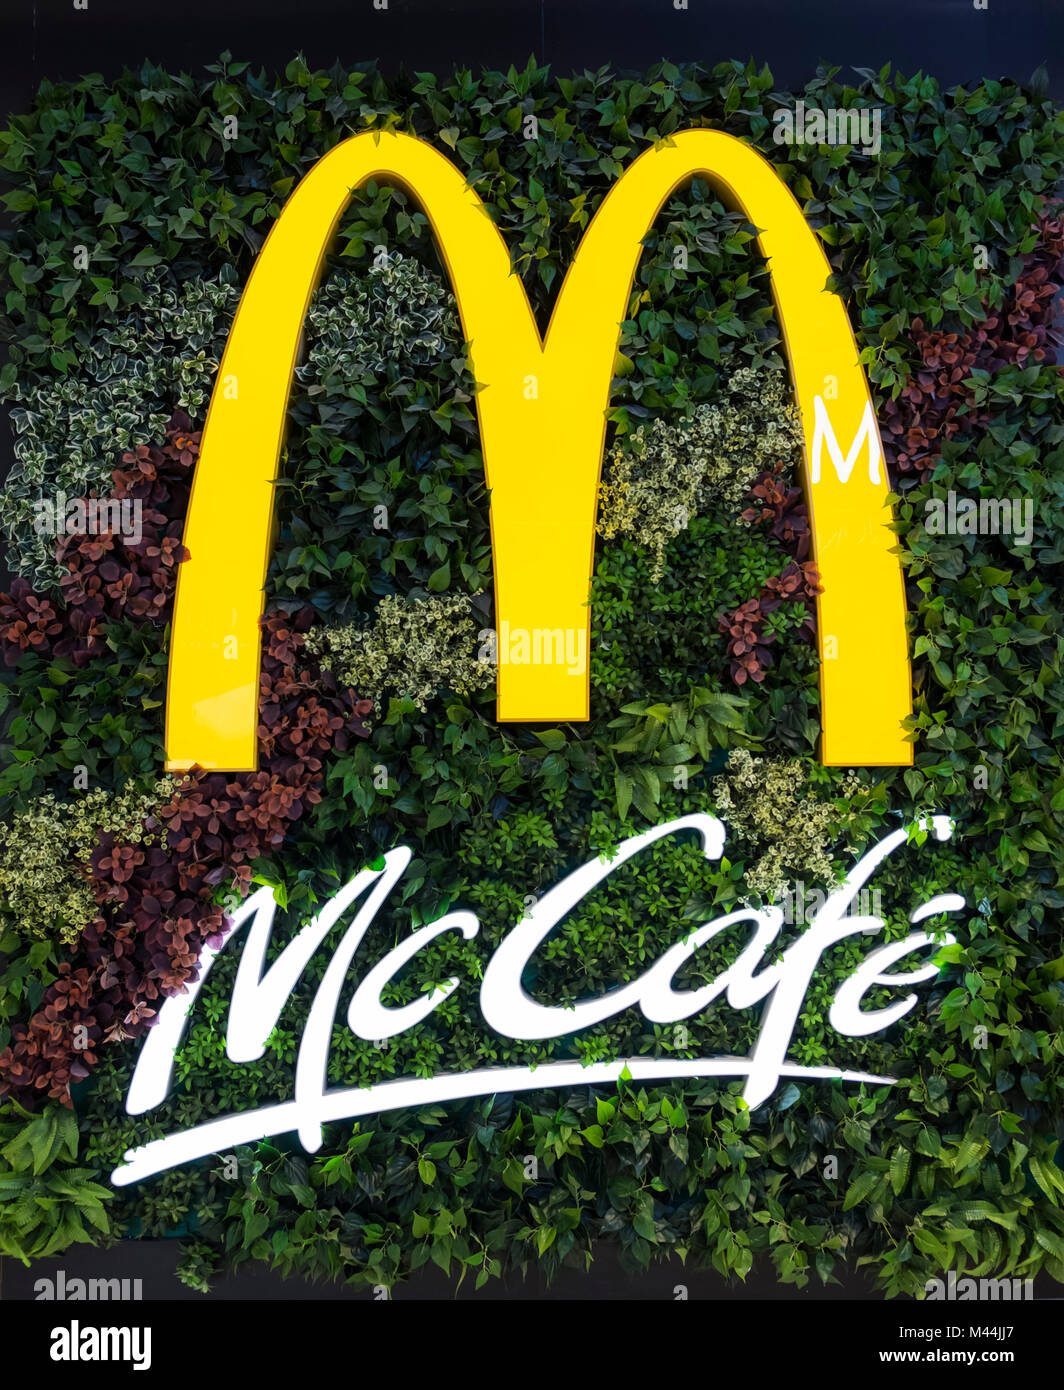 Hong Kong - 11. Februar 2018: McDonald's Restaurant in Hongkong. McDonald's ist eine US-amerikanische Hamburger und Fast Food Restaurant kette. Stockfoto